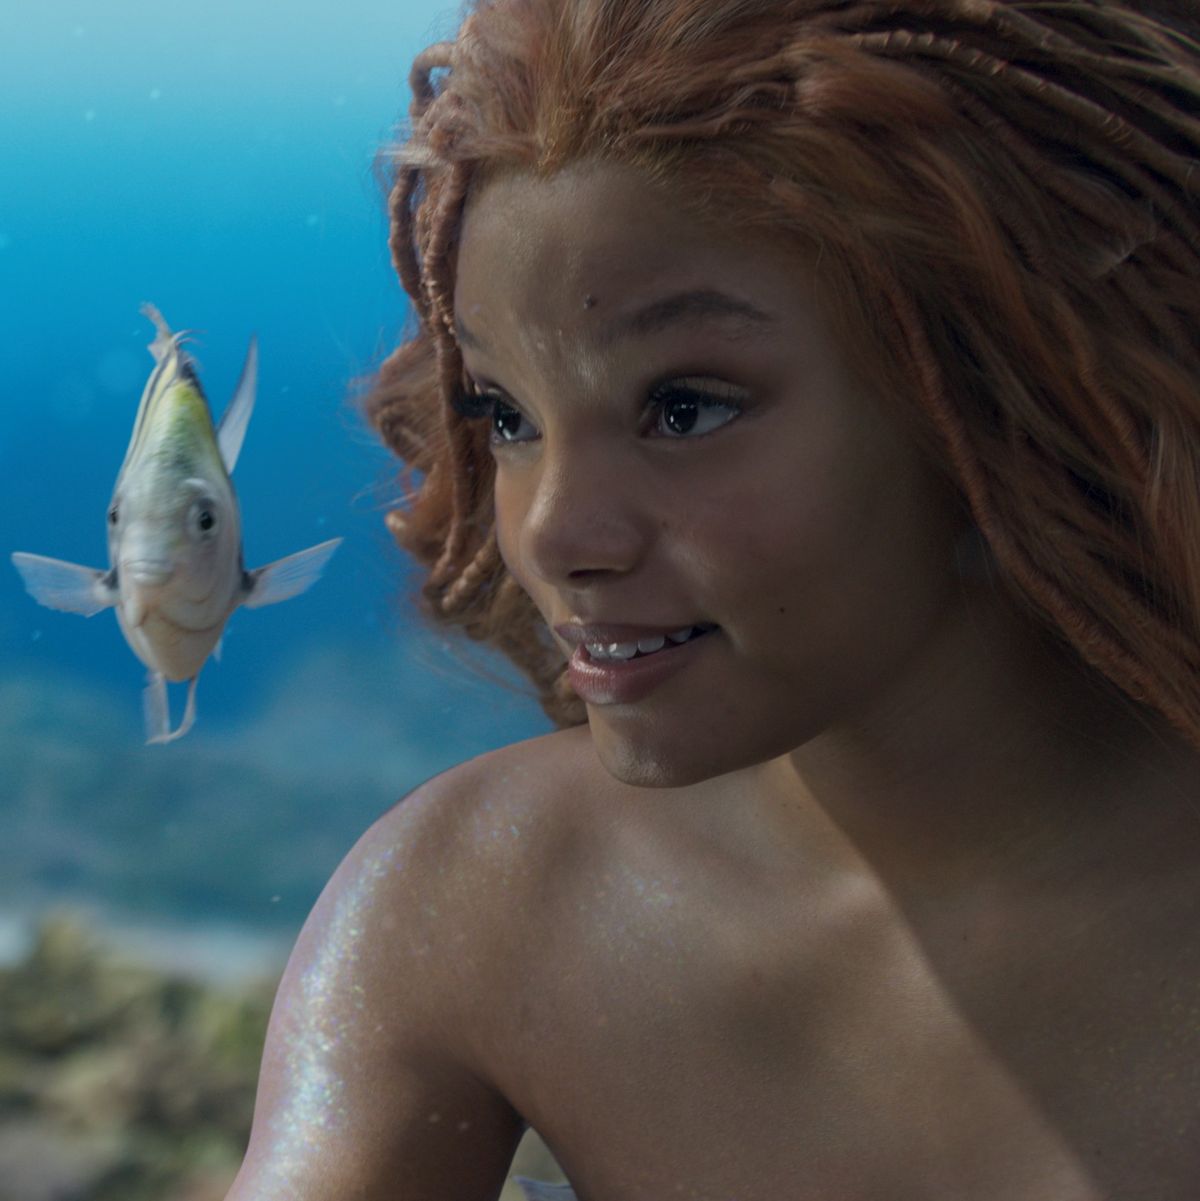 halle bailey as ariel in the little mermaid movie